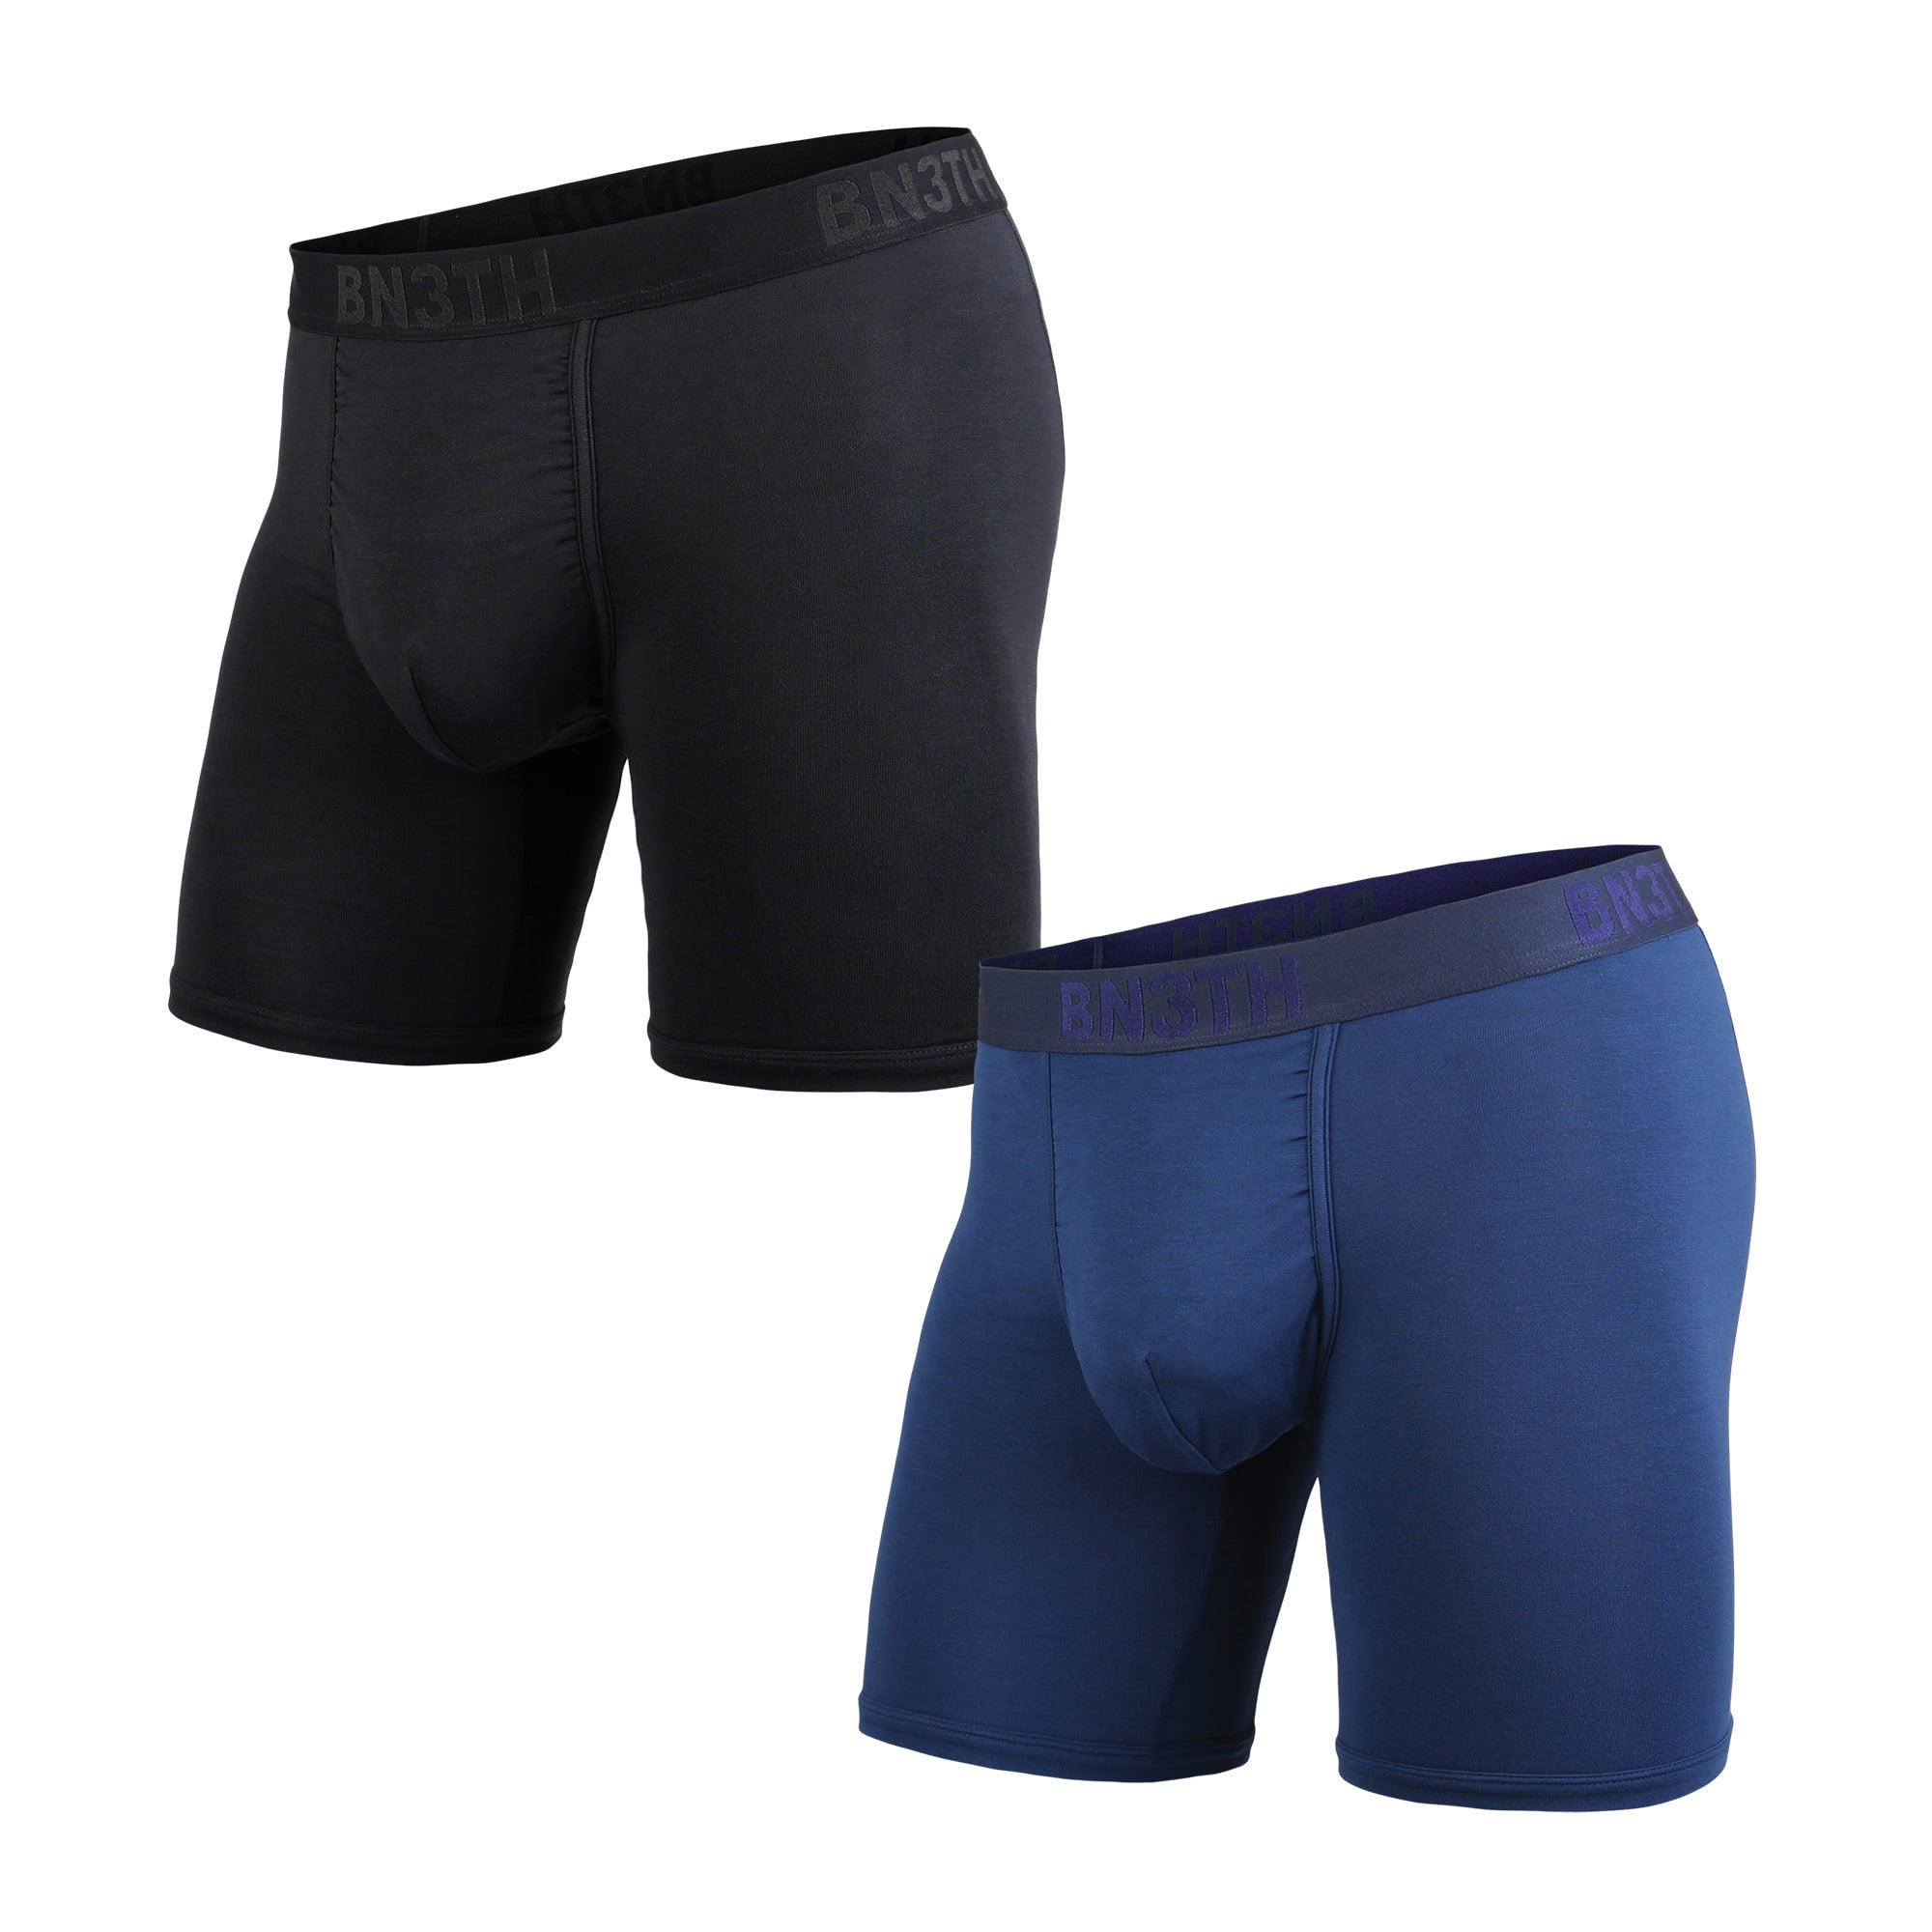 BN3TH Support Pouch Men's Underwear - 2 Pack Boxer Briefs (Black/Navy,  X-Small) 